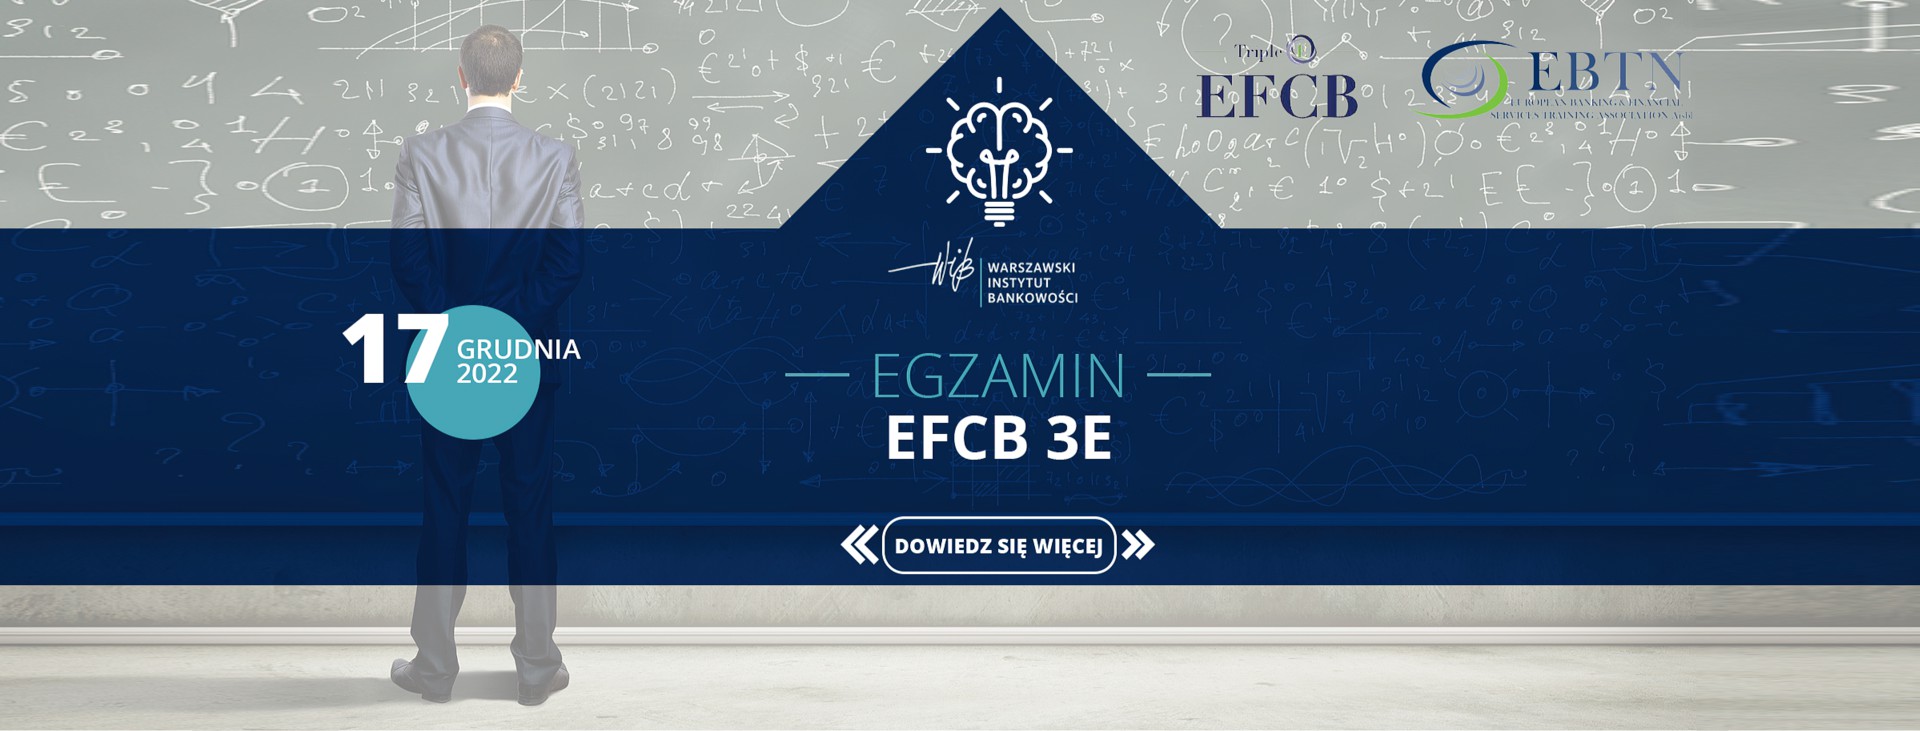 Egzamin EFCB 3E